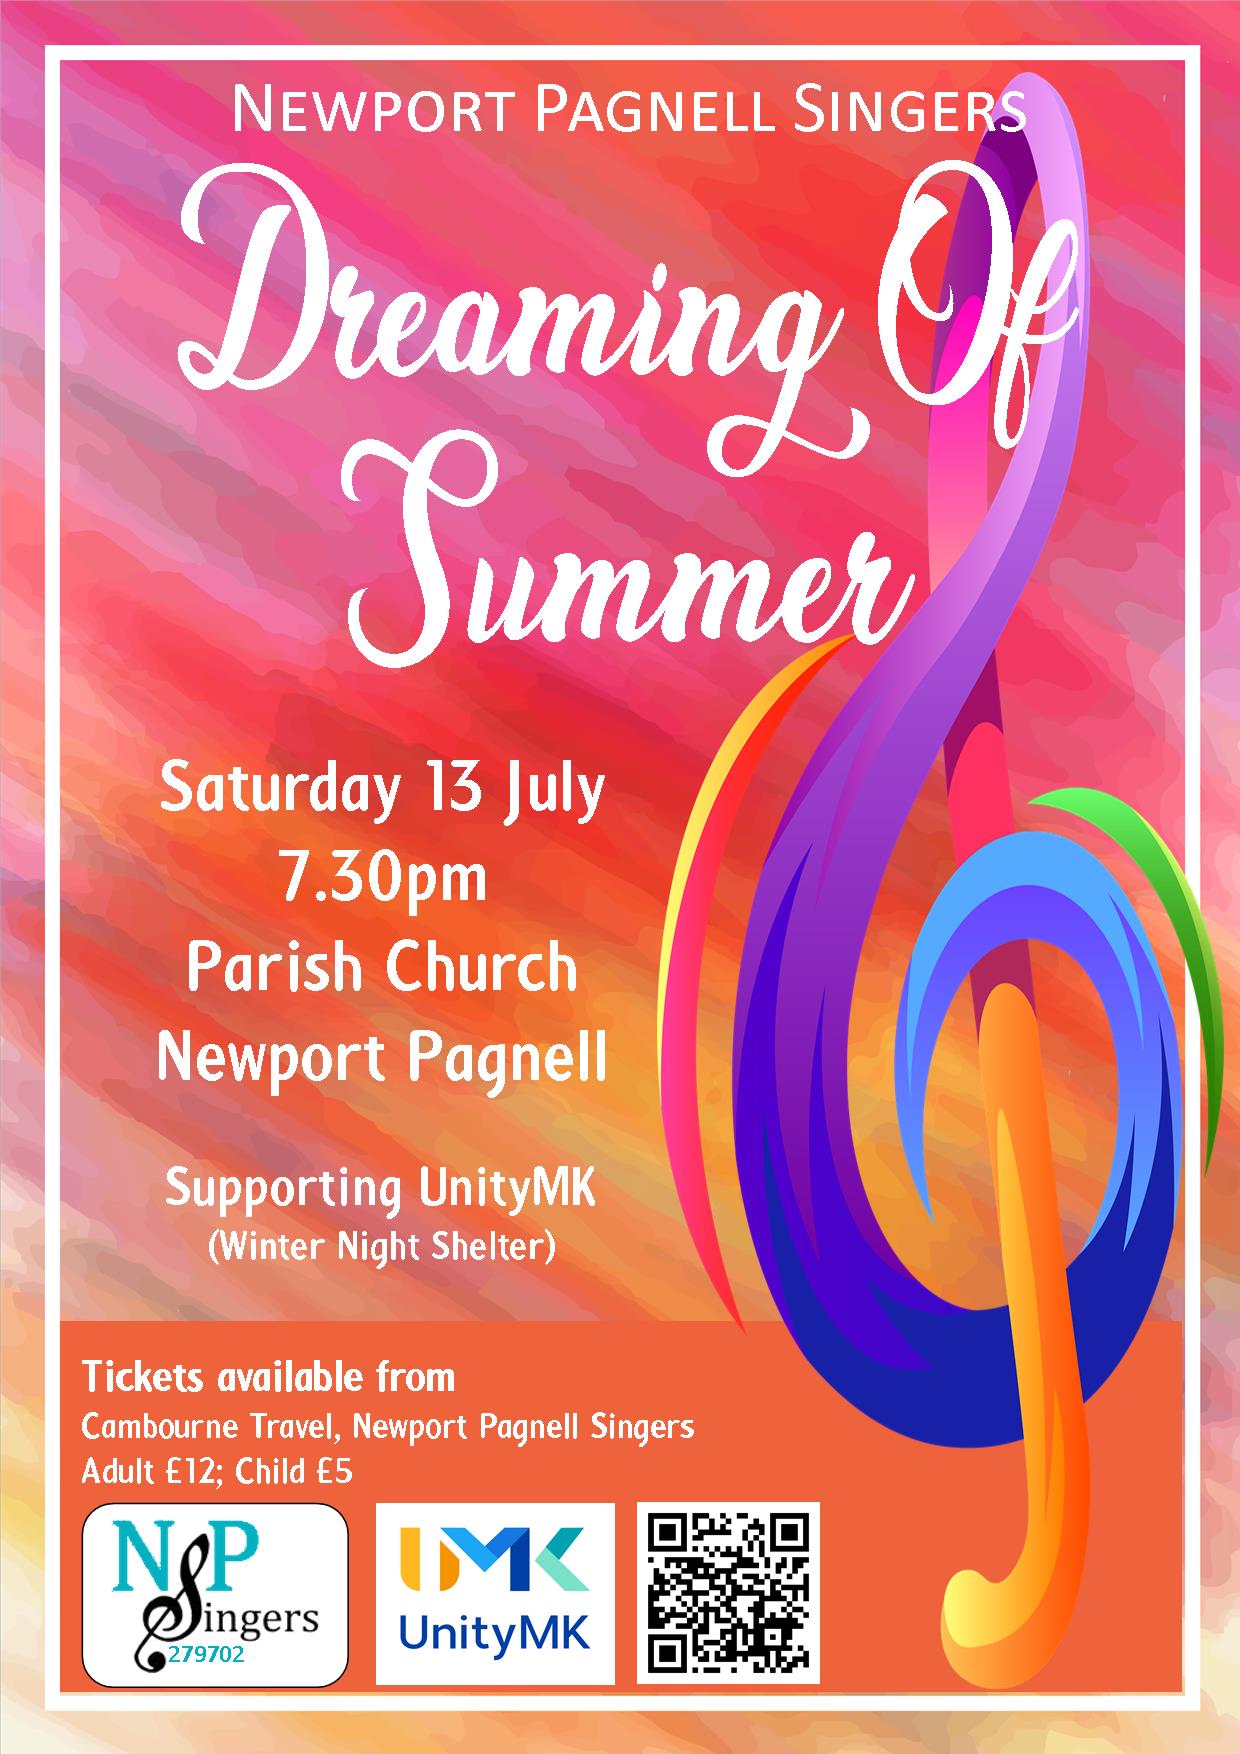 Dreaming of Summer, Saturday 13 July, 7.30pm at Newport Pagnell Parish Church